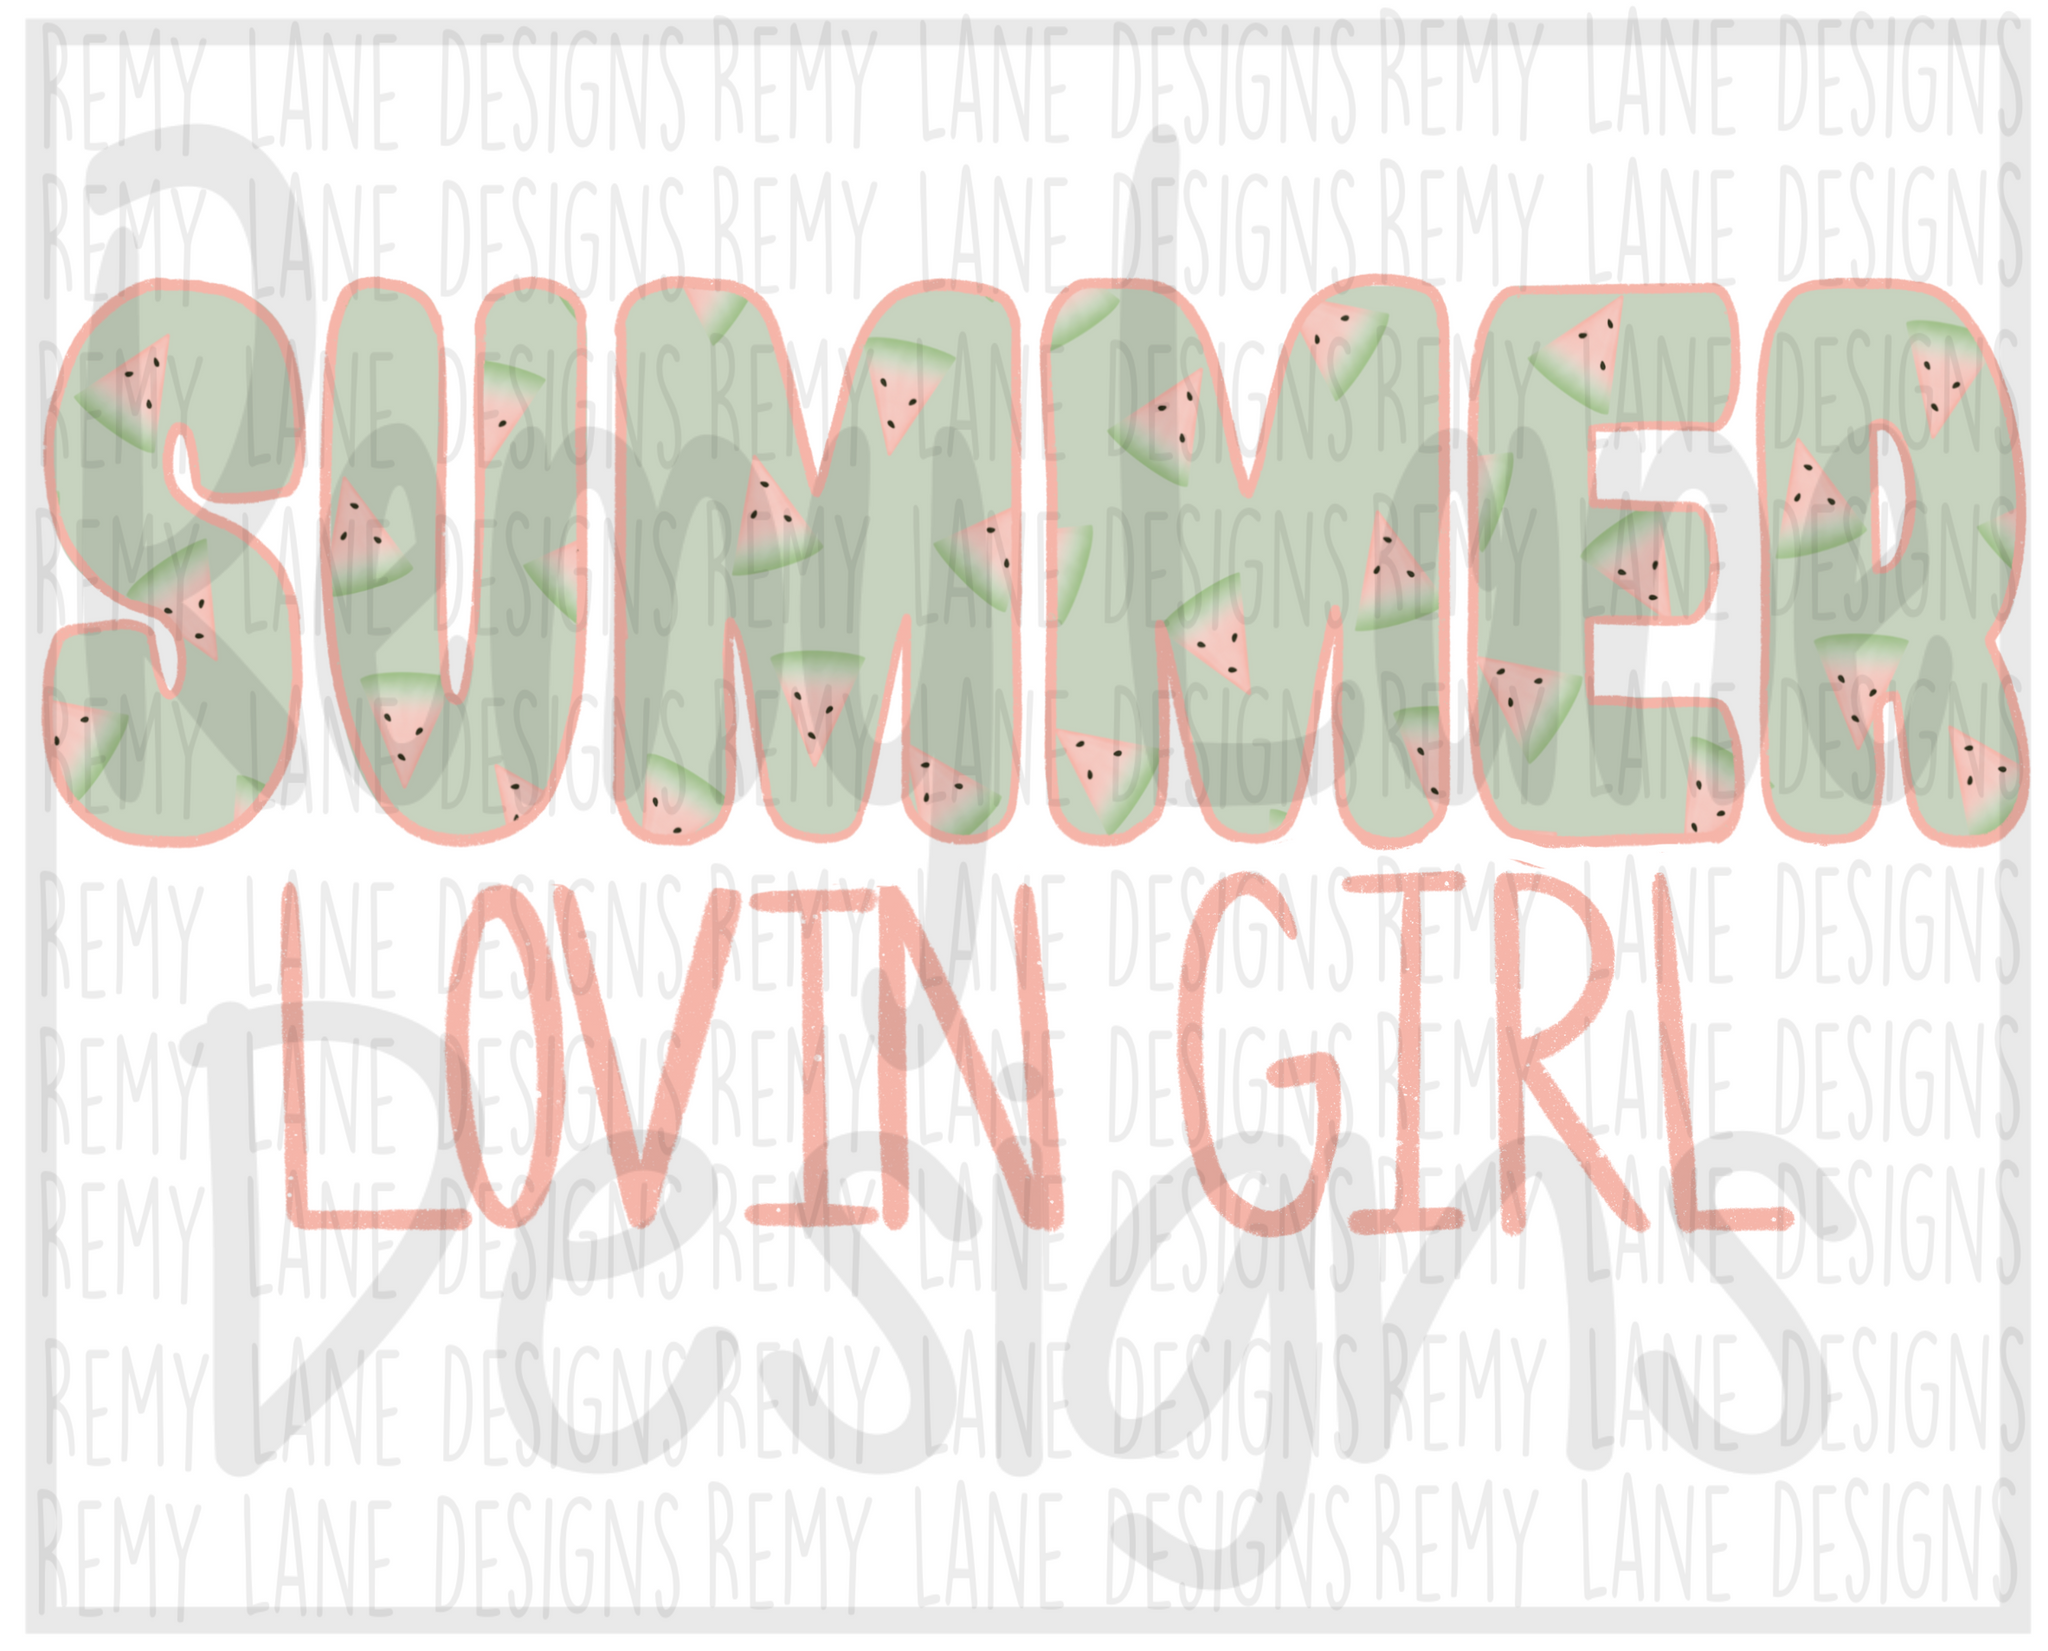 Download Summer Lovin Girl Remy Lane Designs